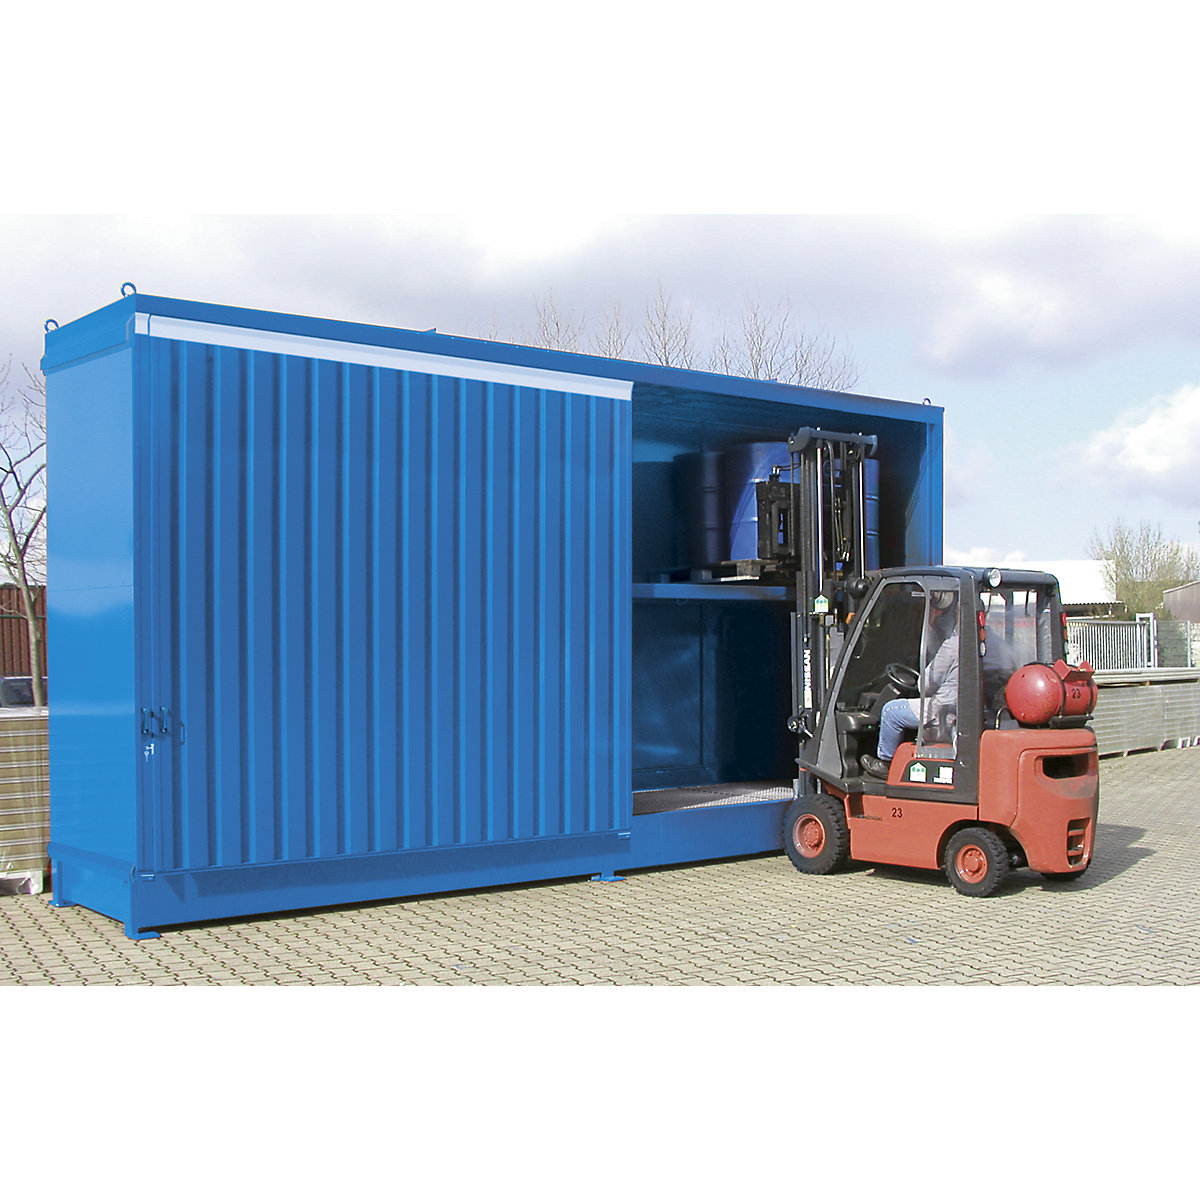 Hazardous goods shelf container – eurokraft pro, capacity 32 x 200 l drums, blue-3